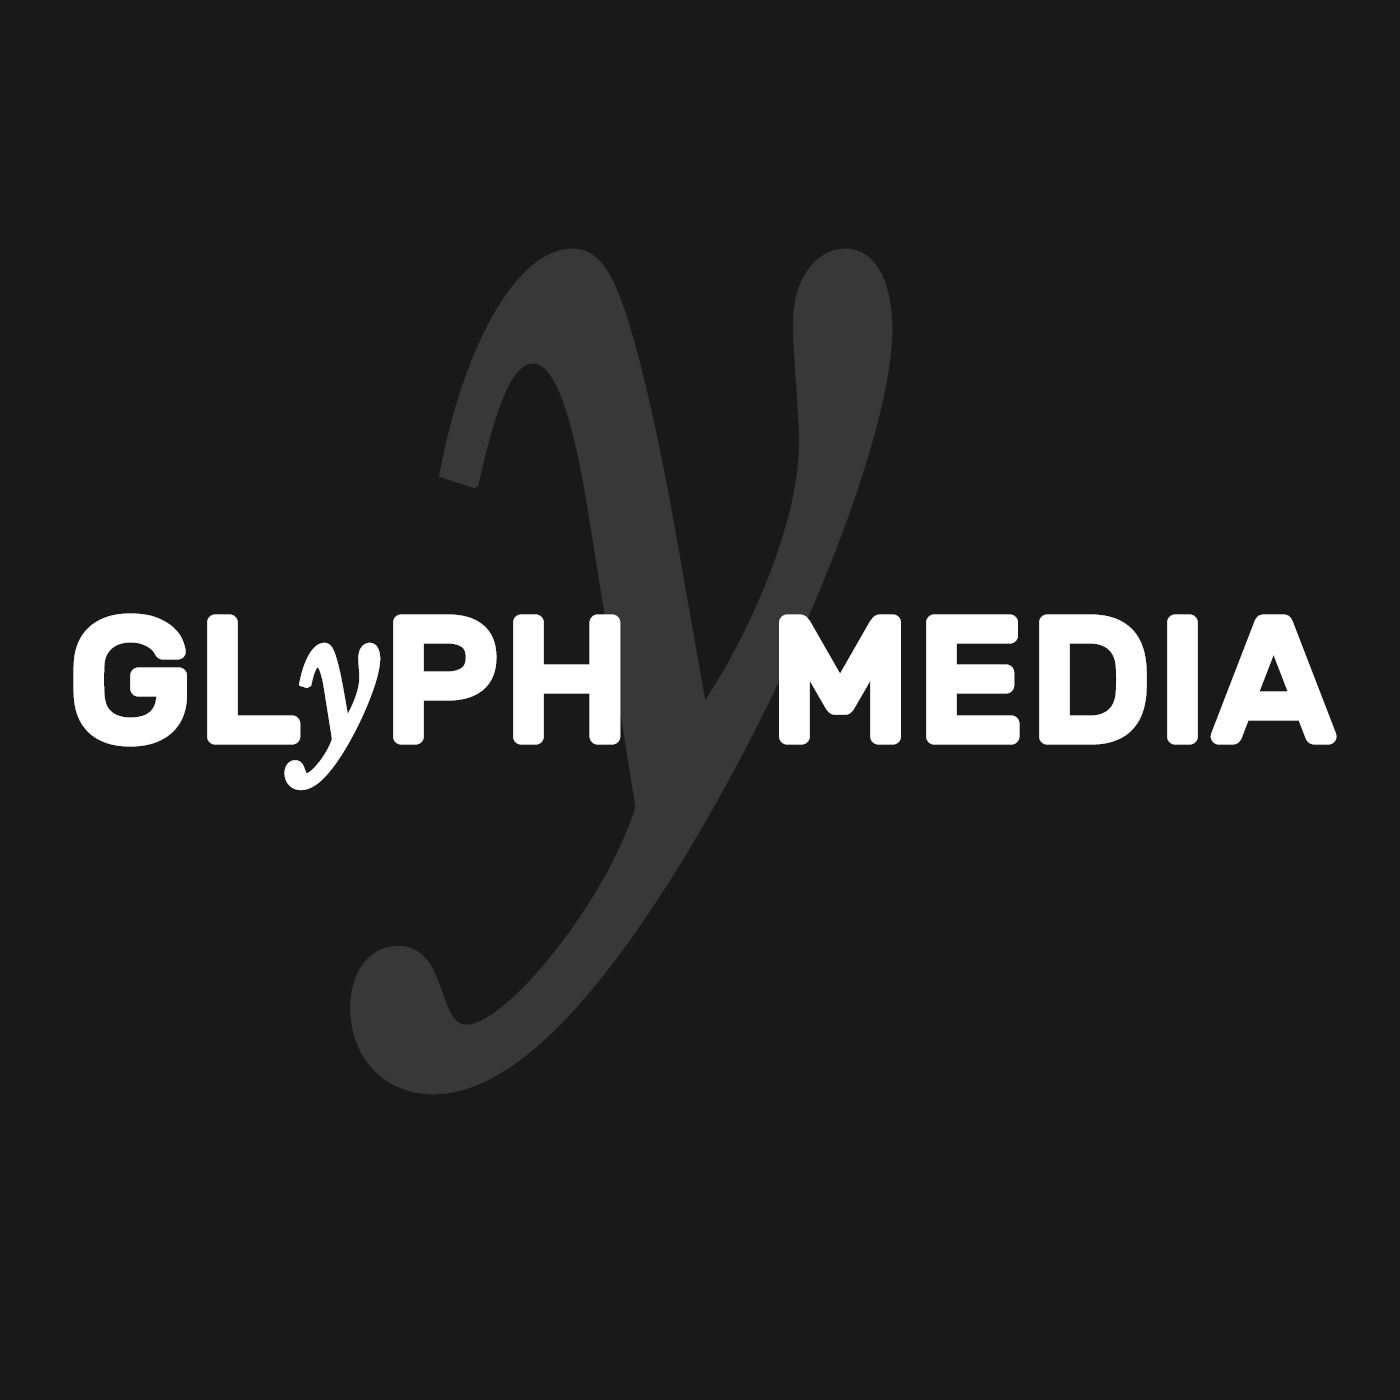 Логотип компании «Glyph media»